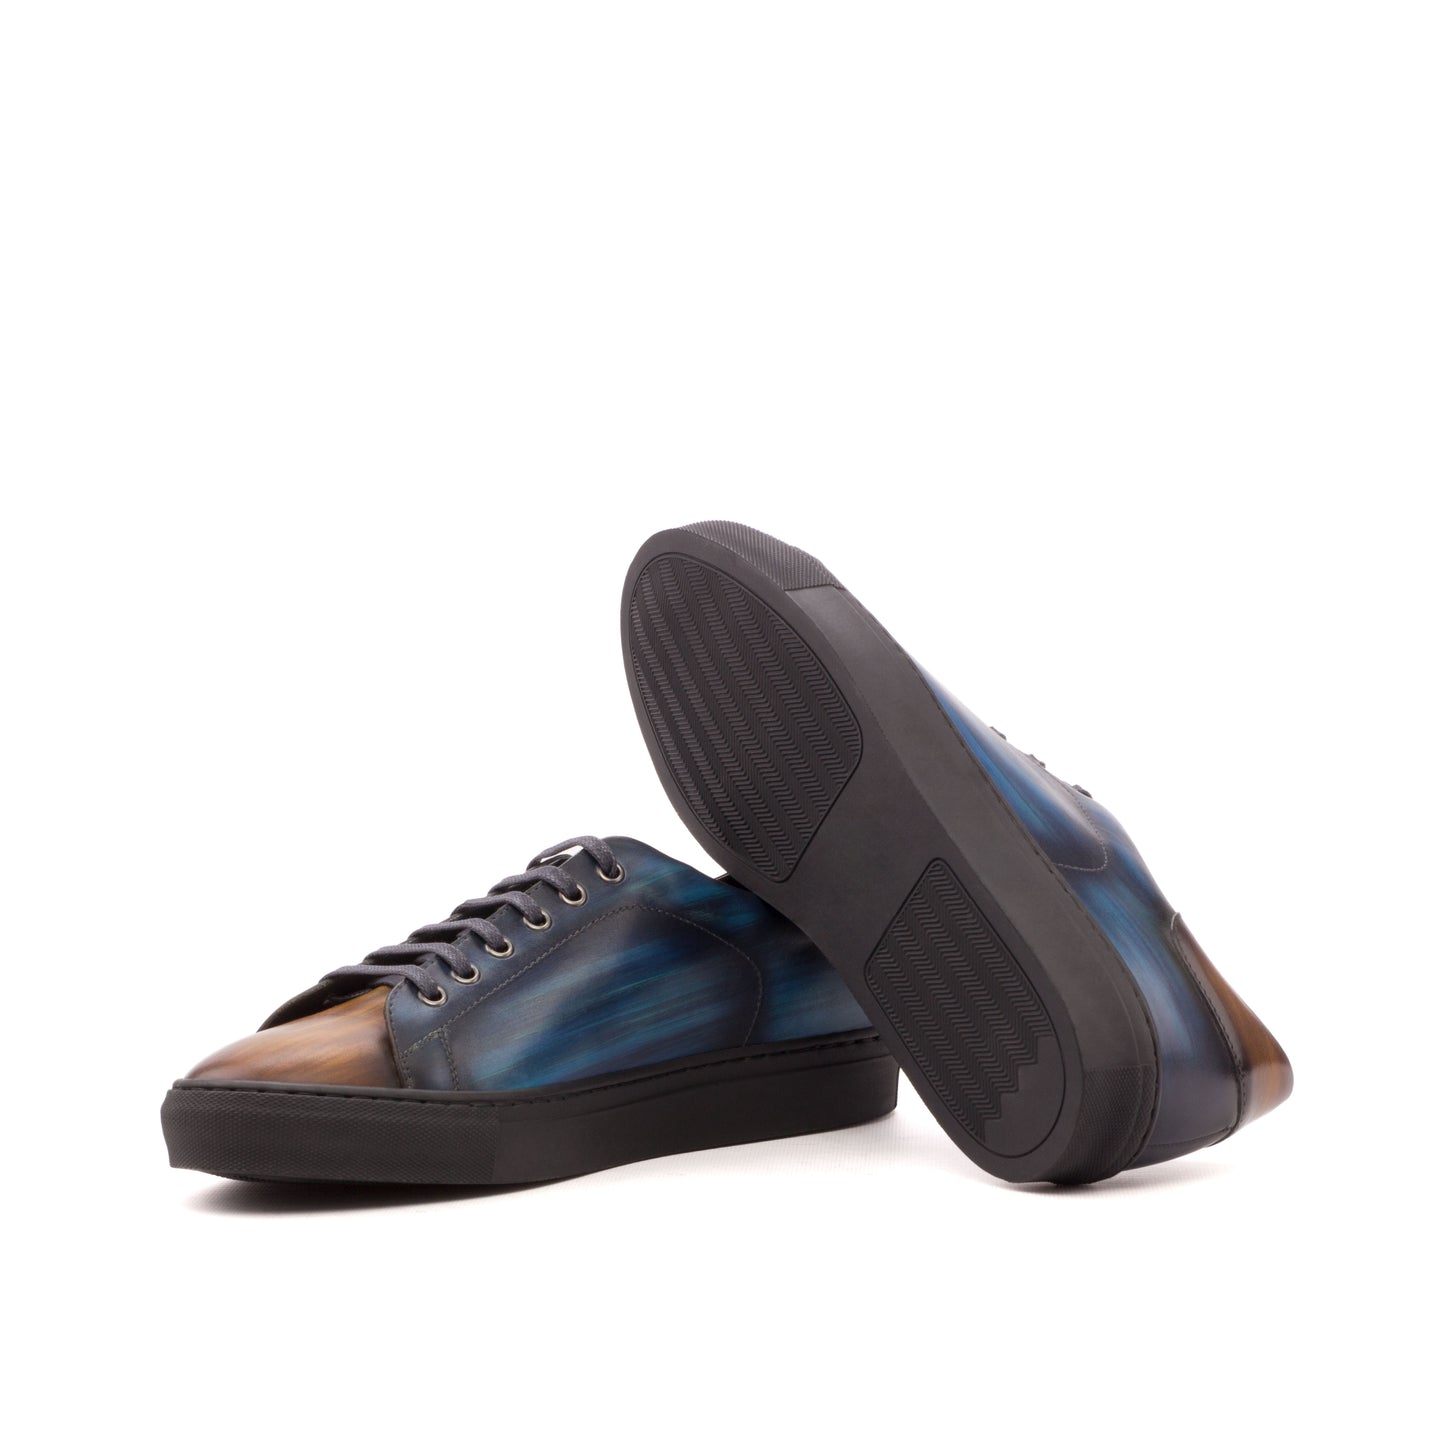 Sneakers mix color patina blue & cognac leather